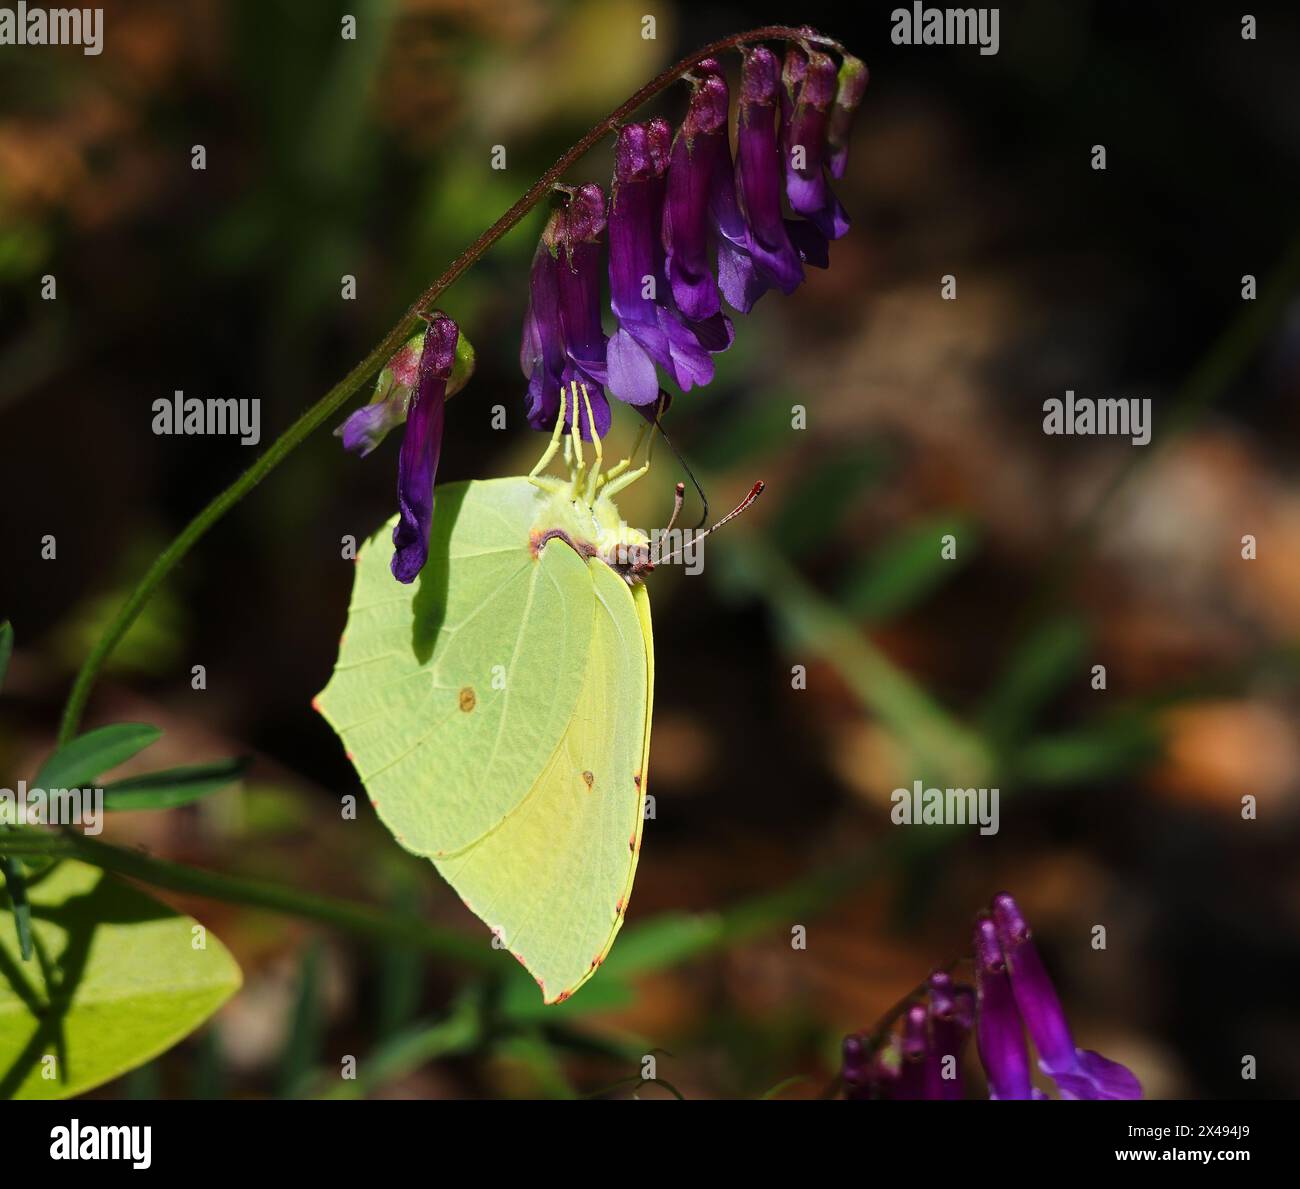 A Brimstone butterfly - Gonepteryx rhamni feeds on fresh Woolly Pod Vetch - Vicia eriocarpa. Spring time, Oeiras, Portugal. Stock Photo